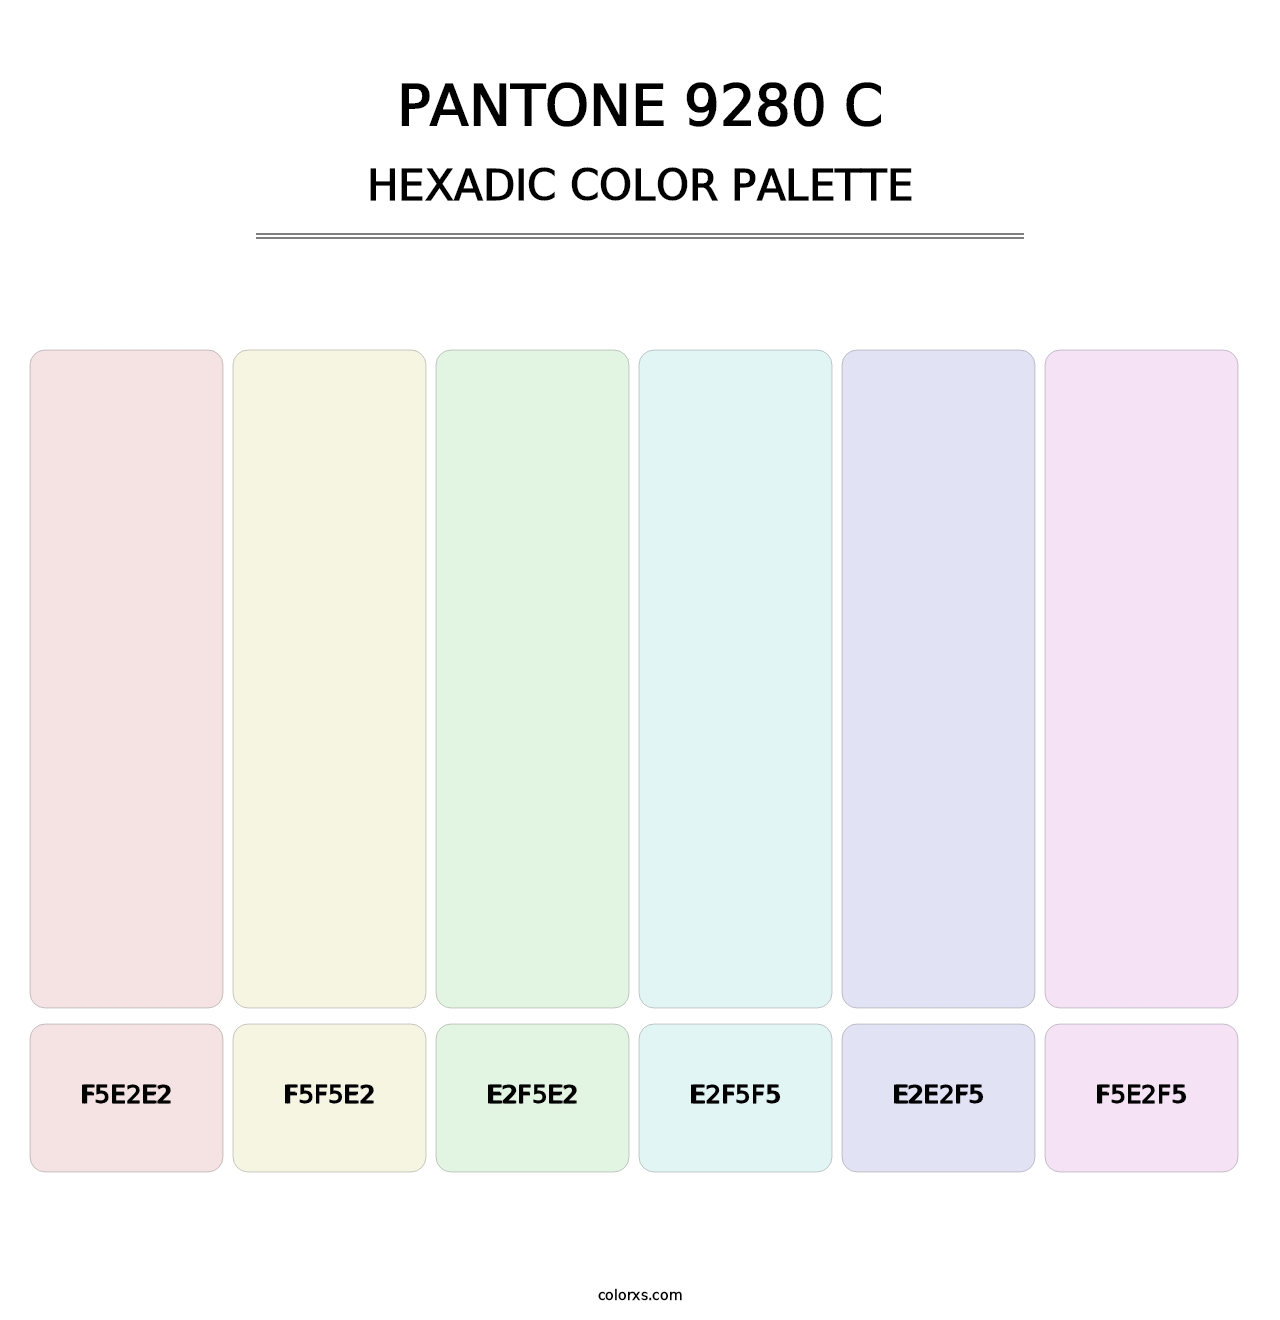 PANTONE 9280 C - Hexadic Color Palette